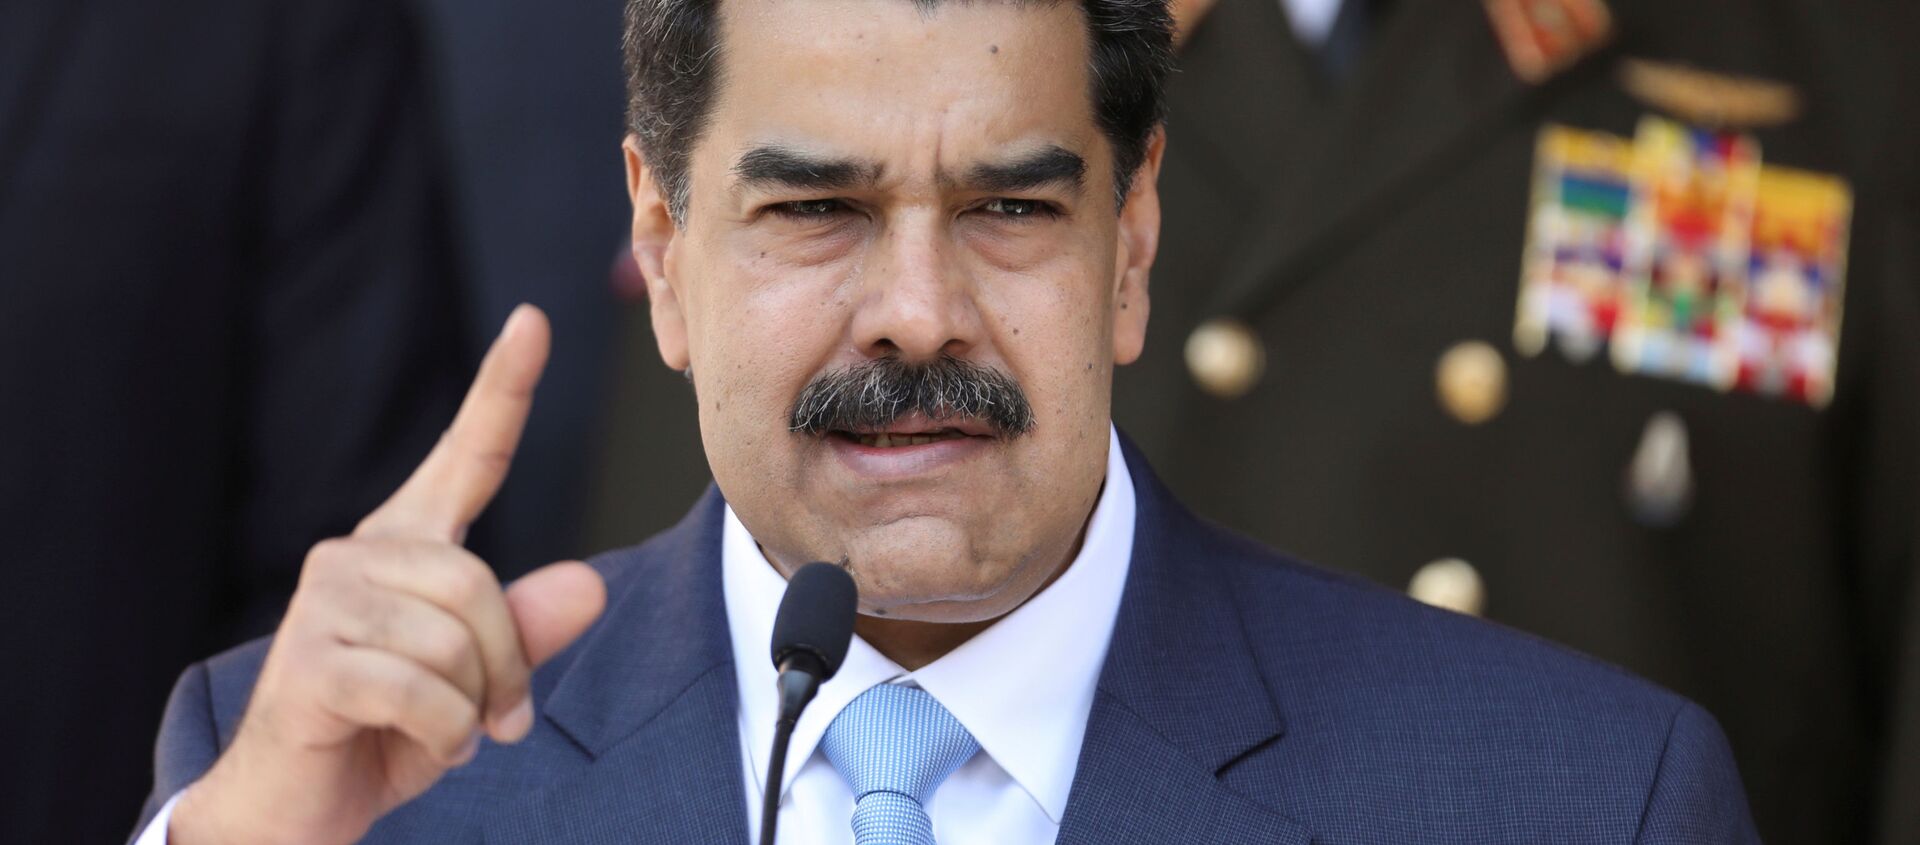 Nicolás Maduro, presidente de Venezuela - Sputnik Afrique, 1920, 25.05.2020